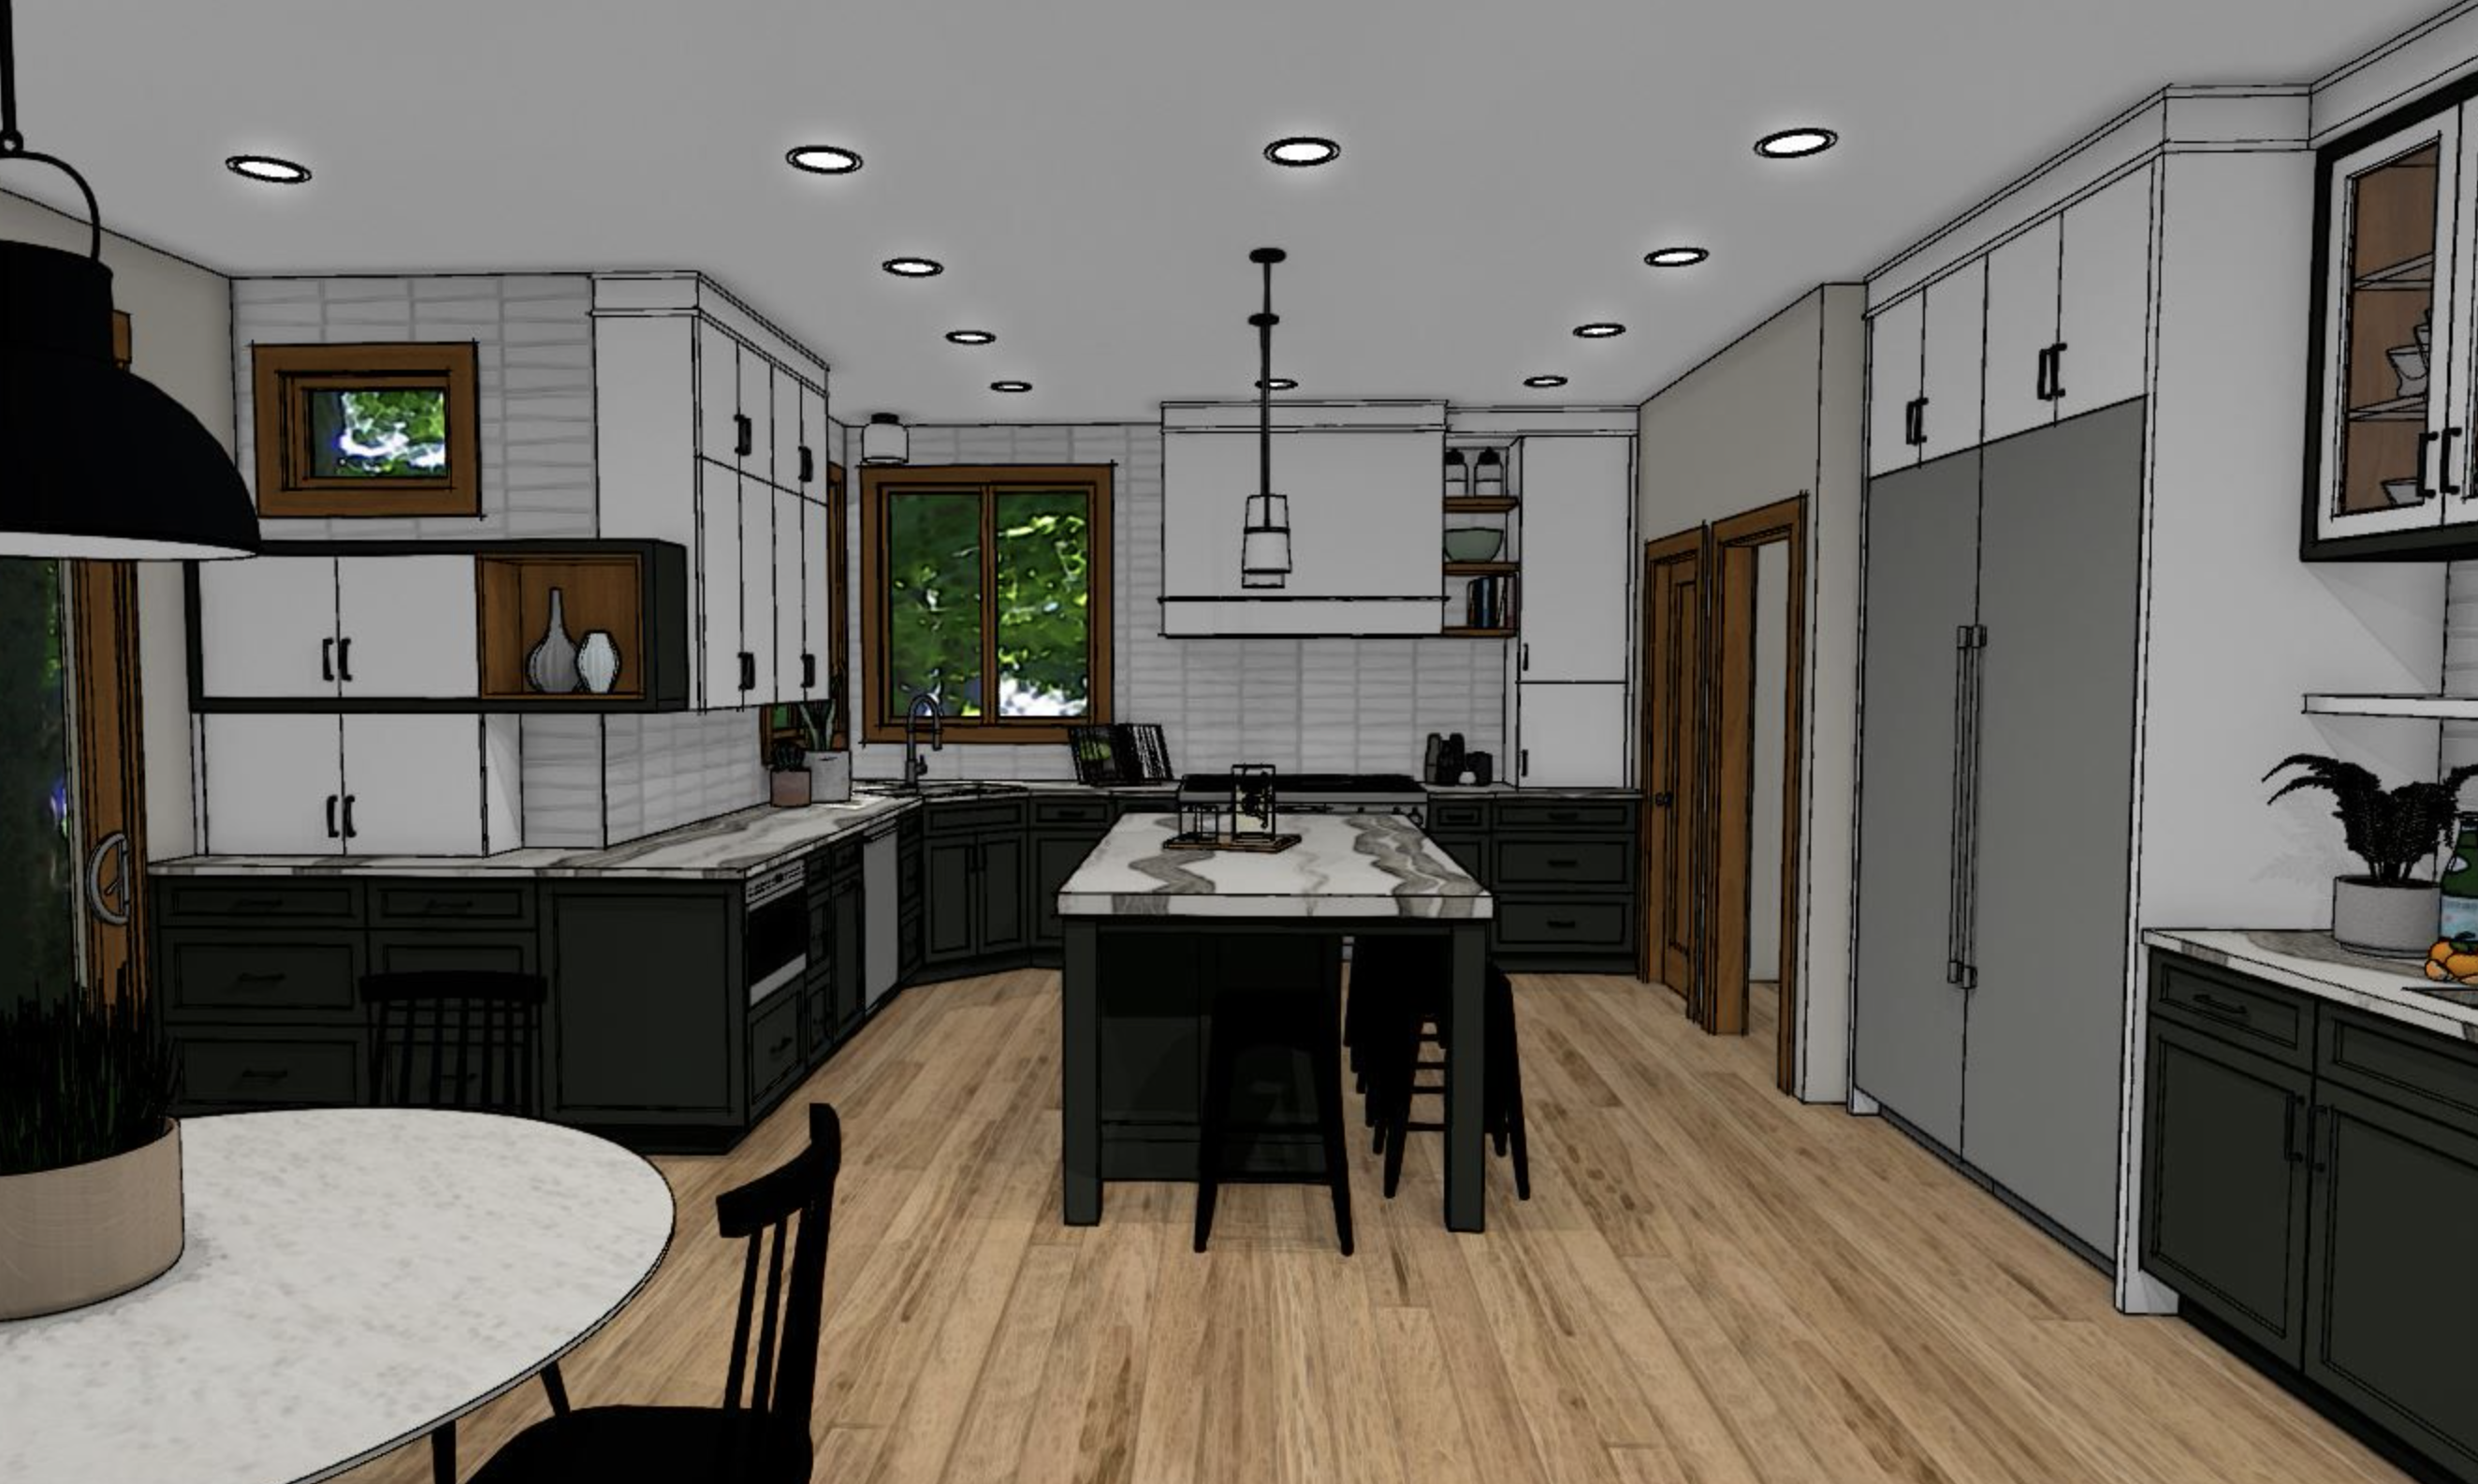 Moody, contemporary kitchen design featuring original trim